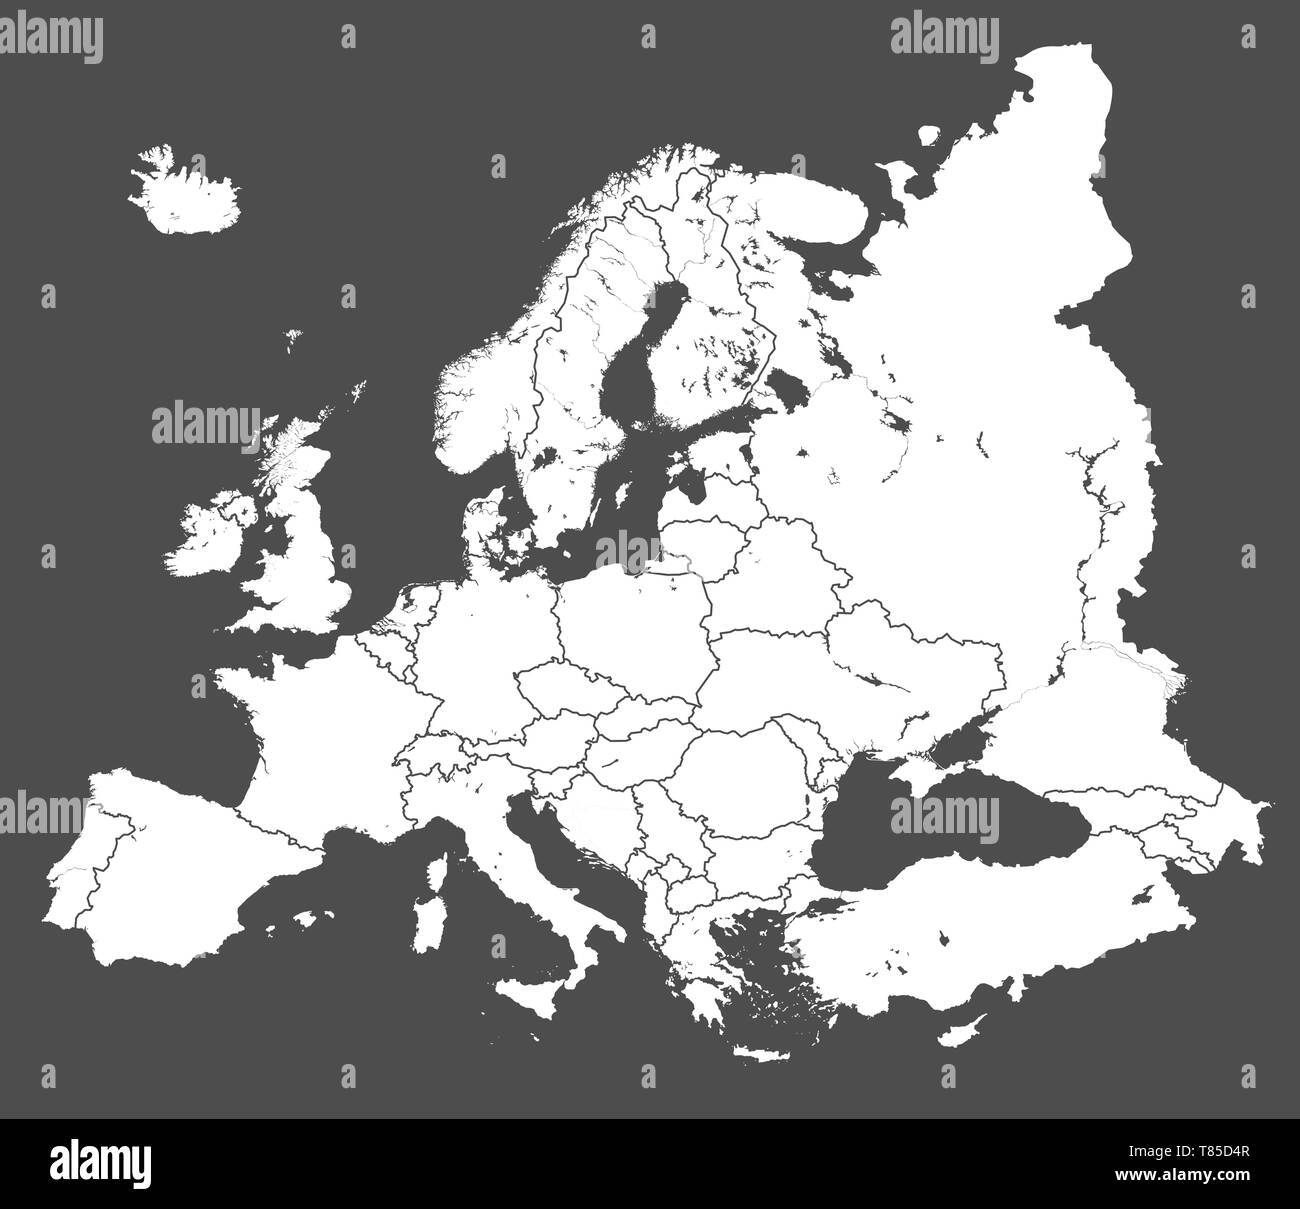 Europa Vektor hohe politische Karte Stock Vektor